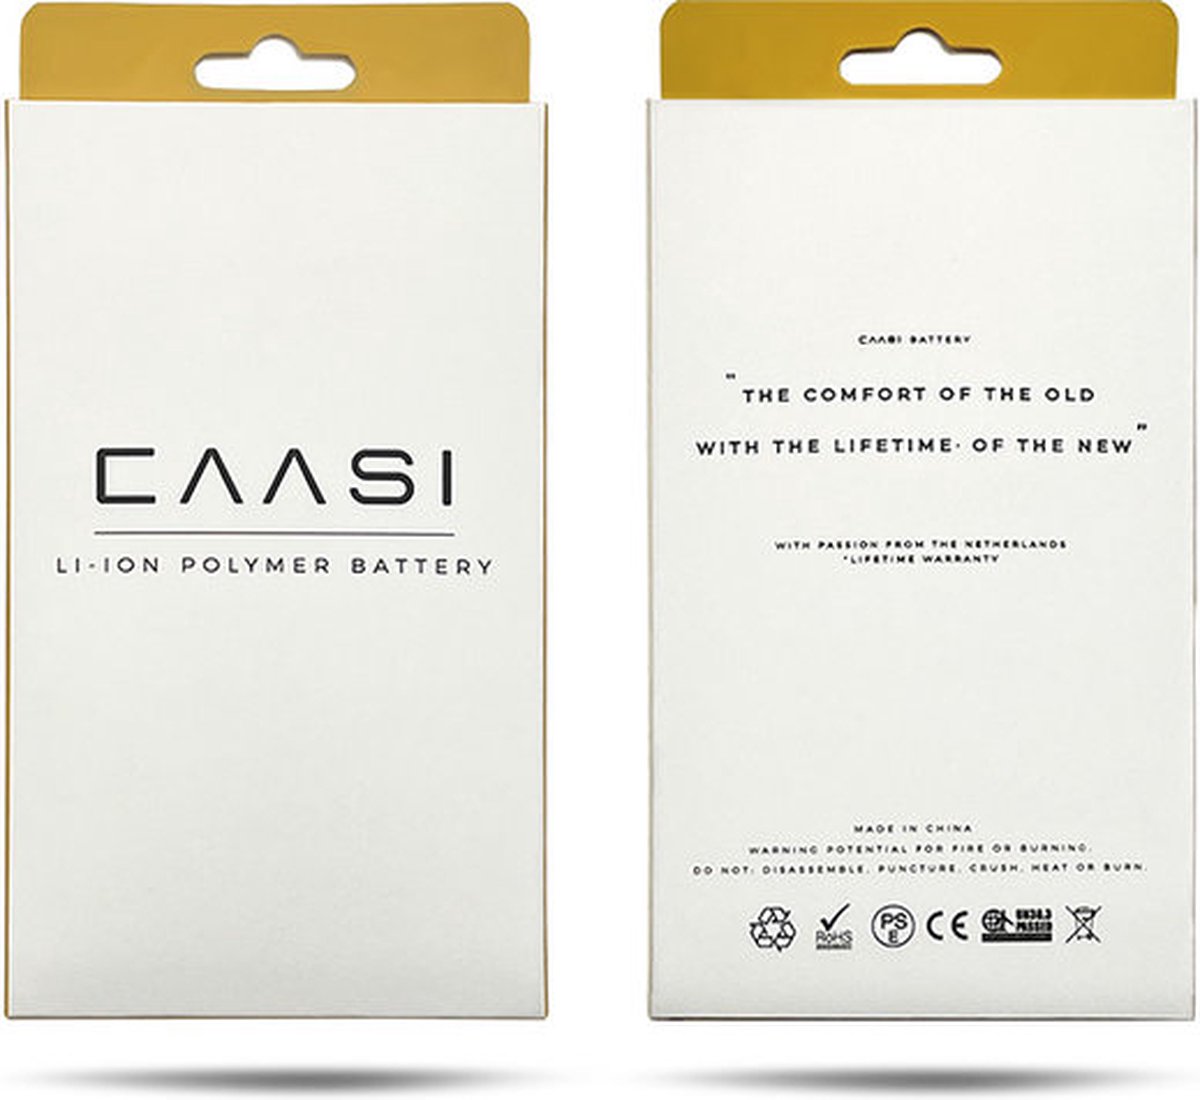 Caasi iPhone 6 Plus Batterij | Batterij sticker | Originele kwaliteit |